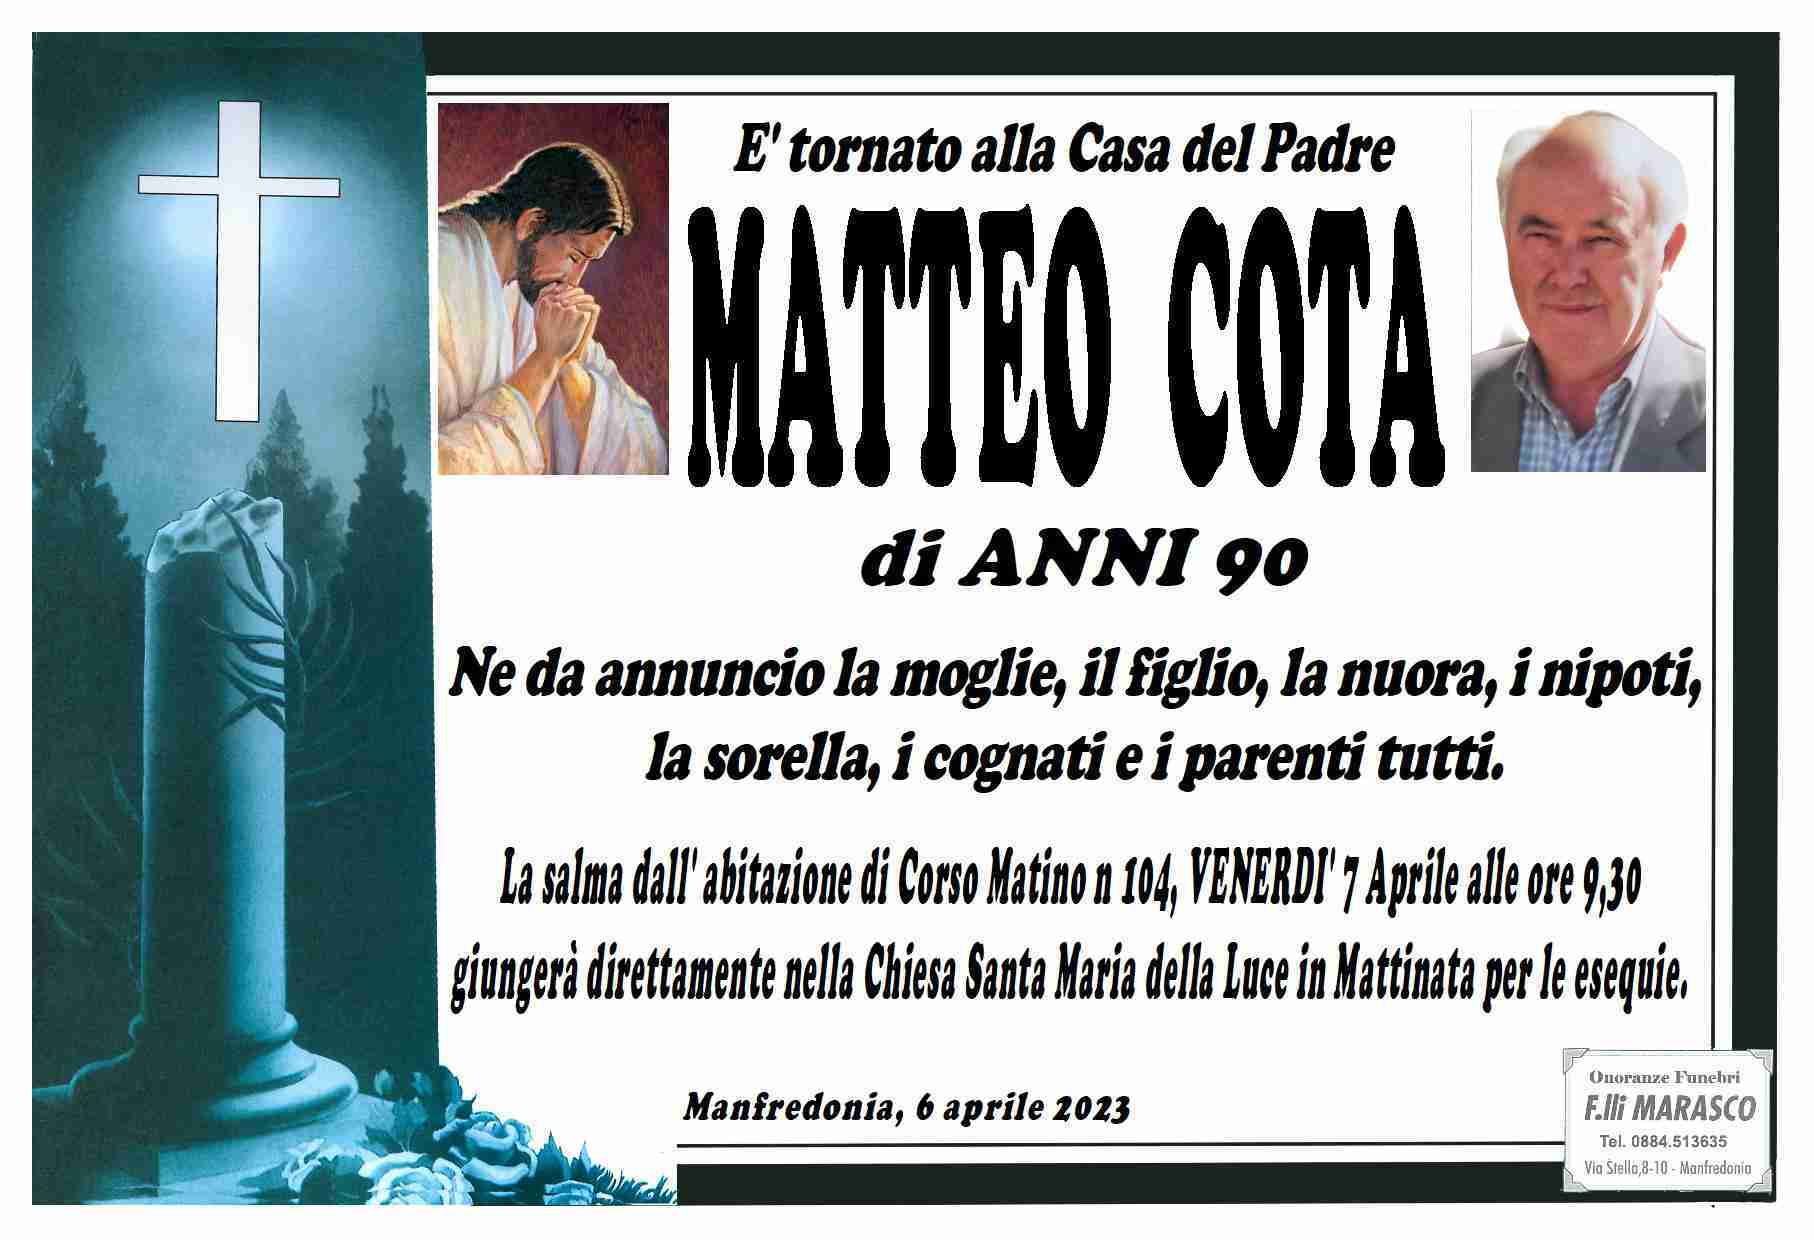 Matteo Cota